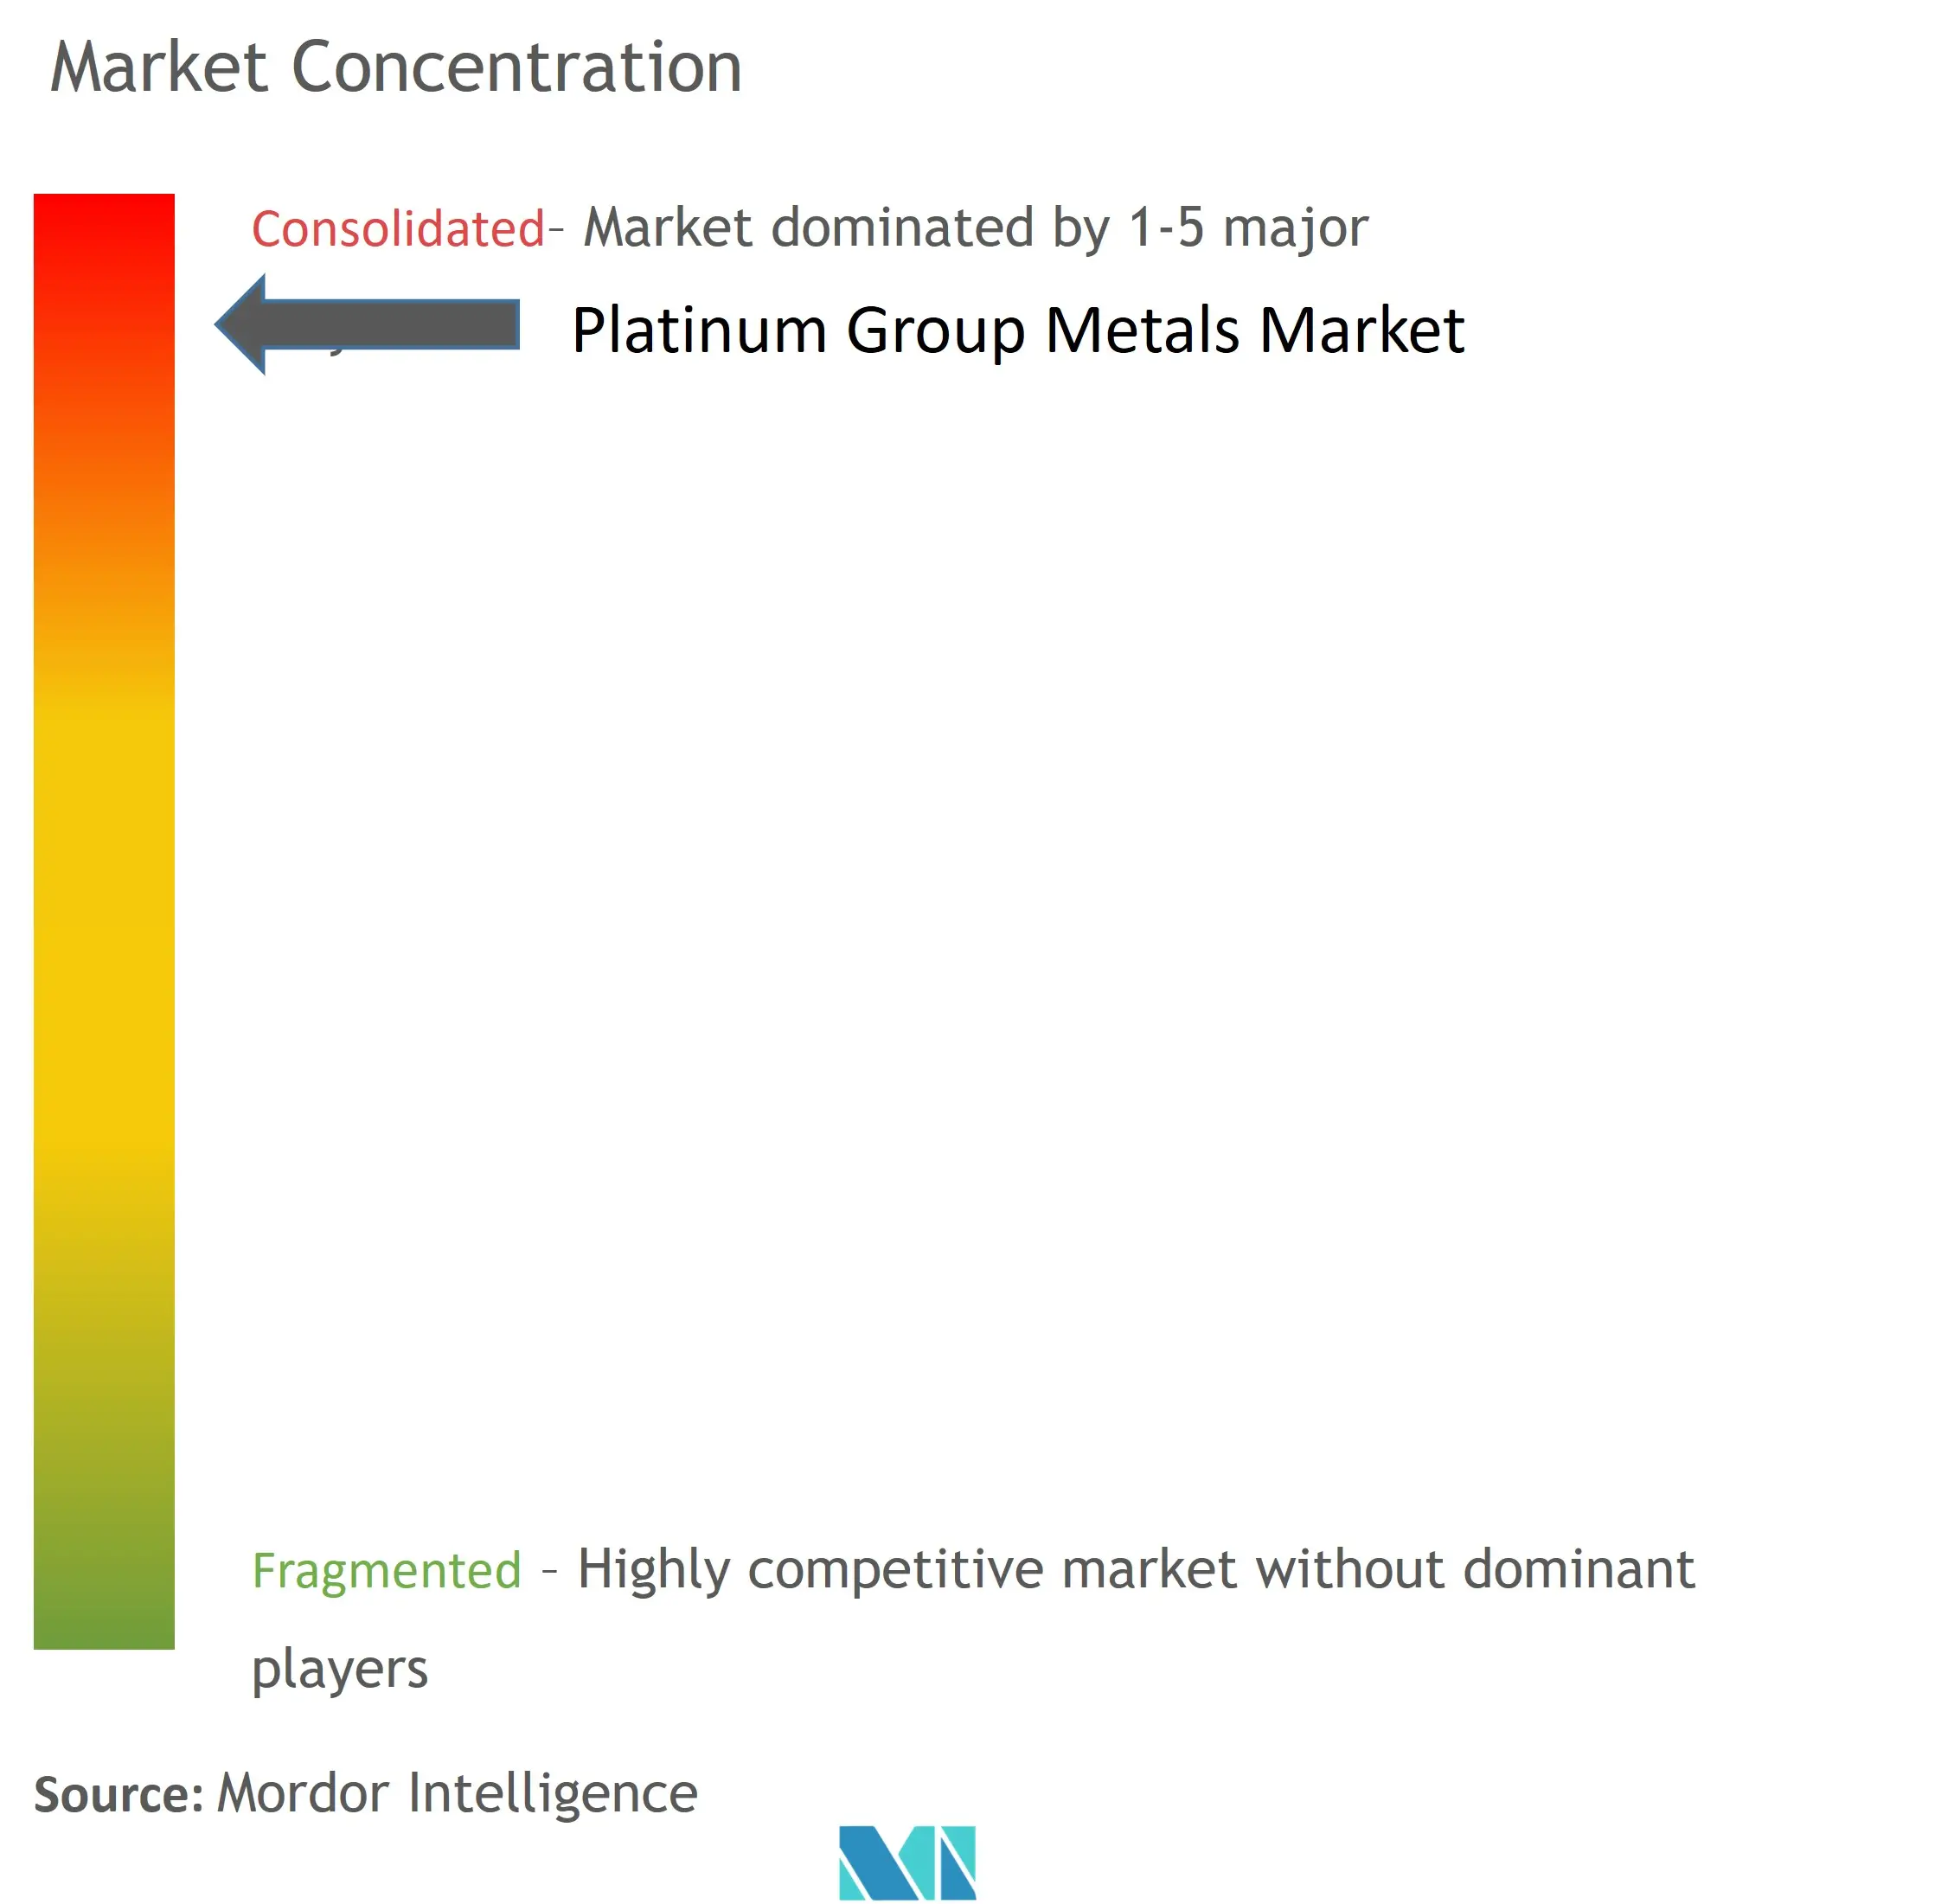 Platinum Group Metals Market Concentration